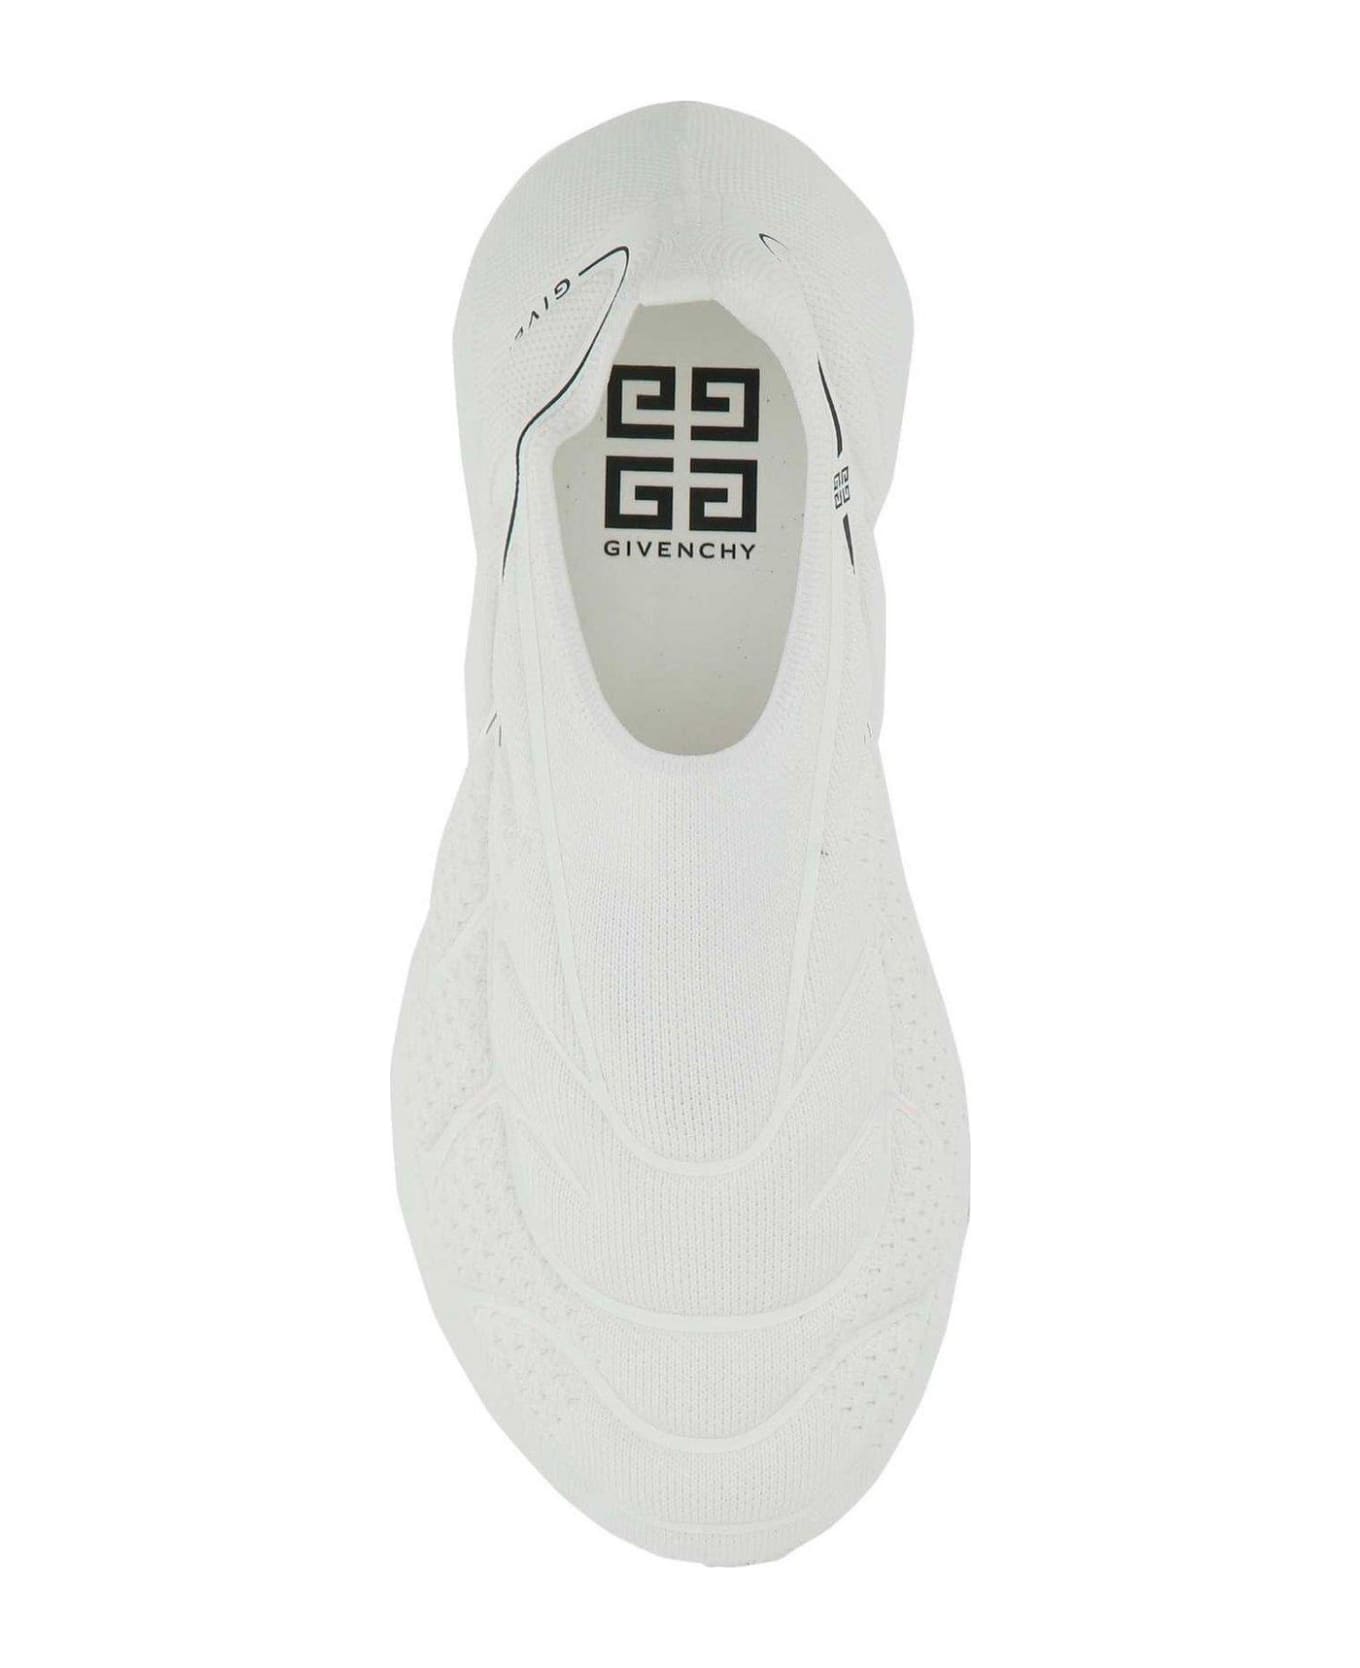 Givenchy Tk-360 Slip-on Sneakers - White スニーカー